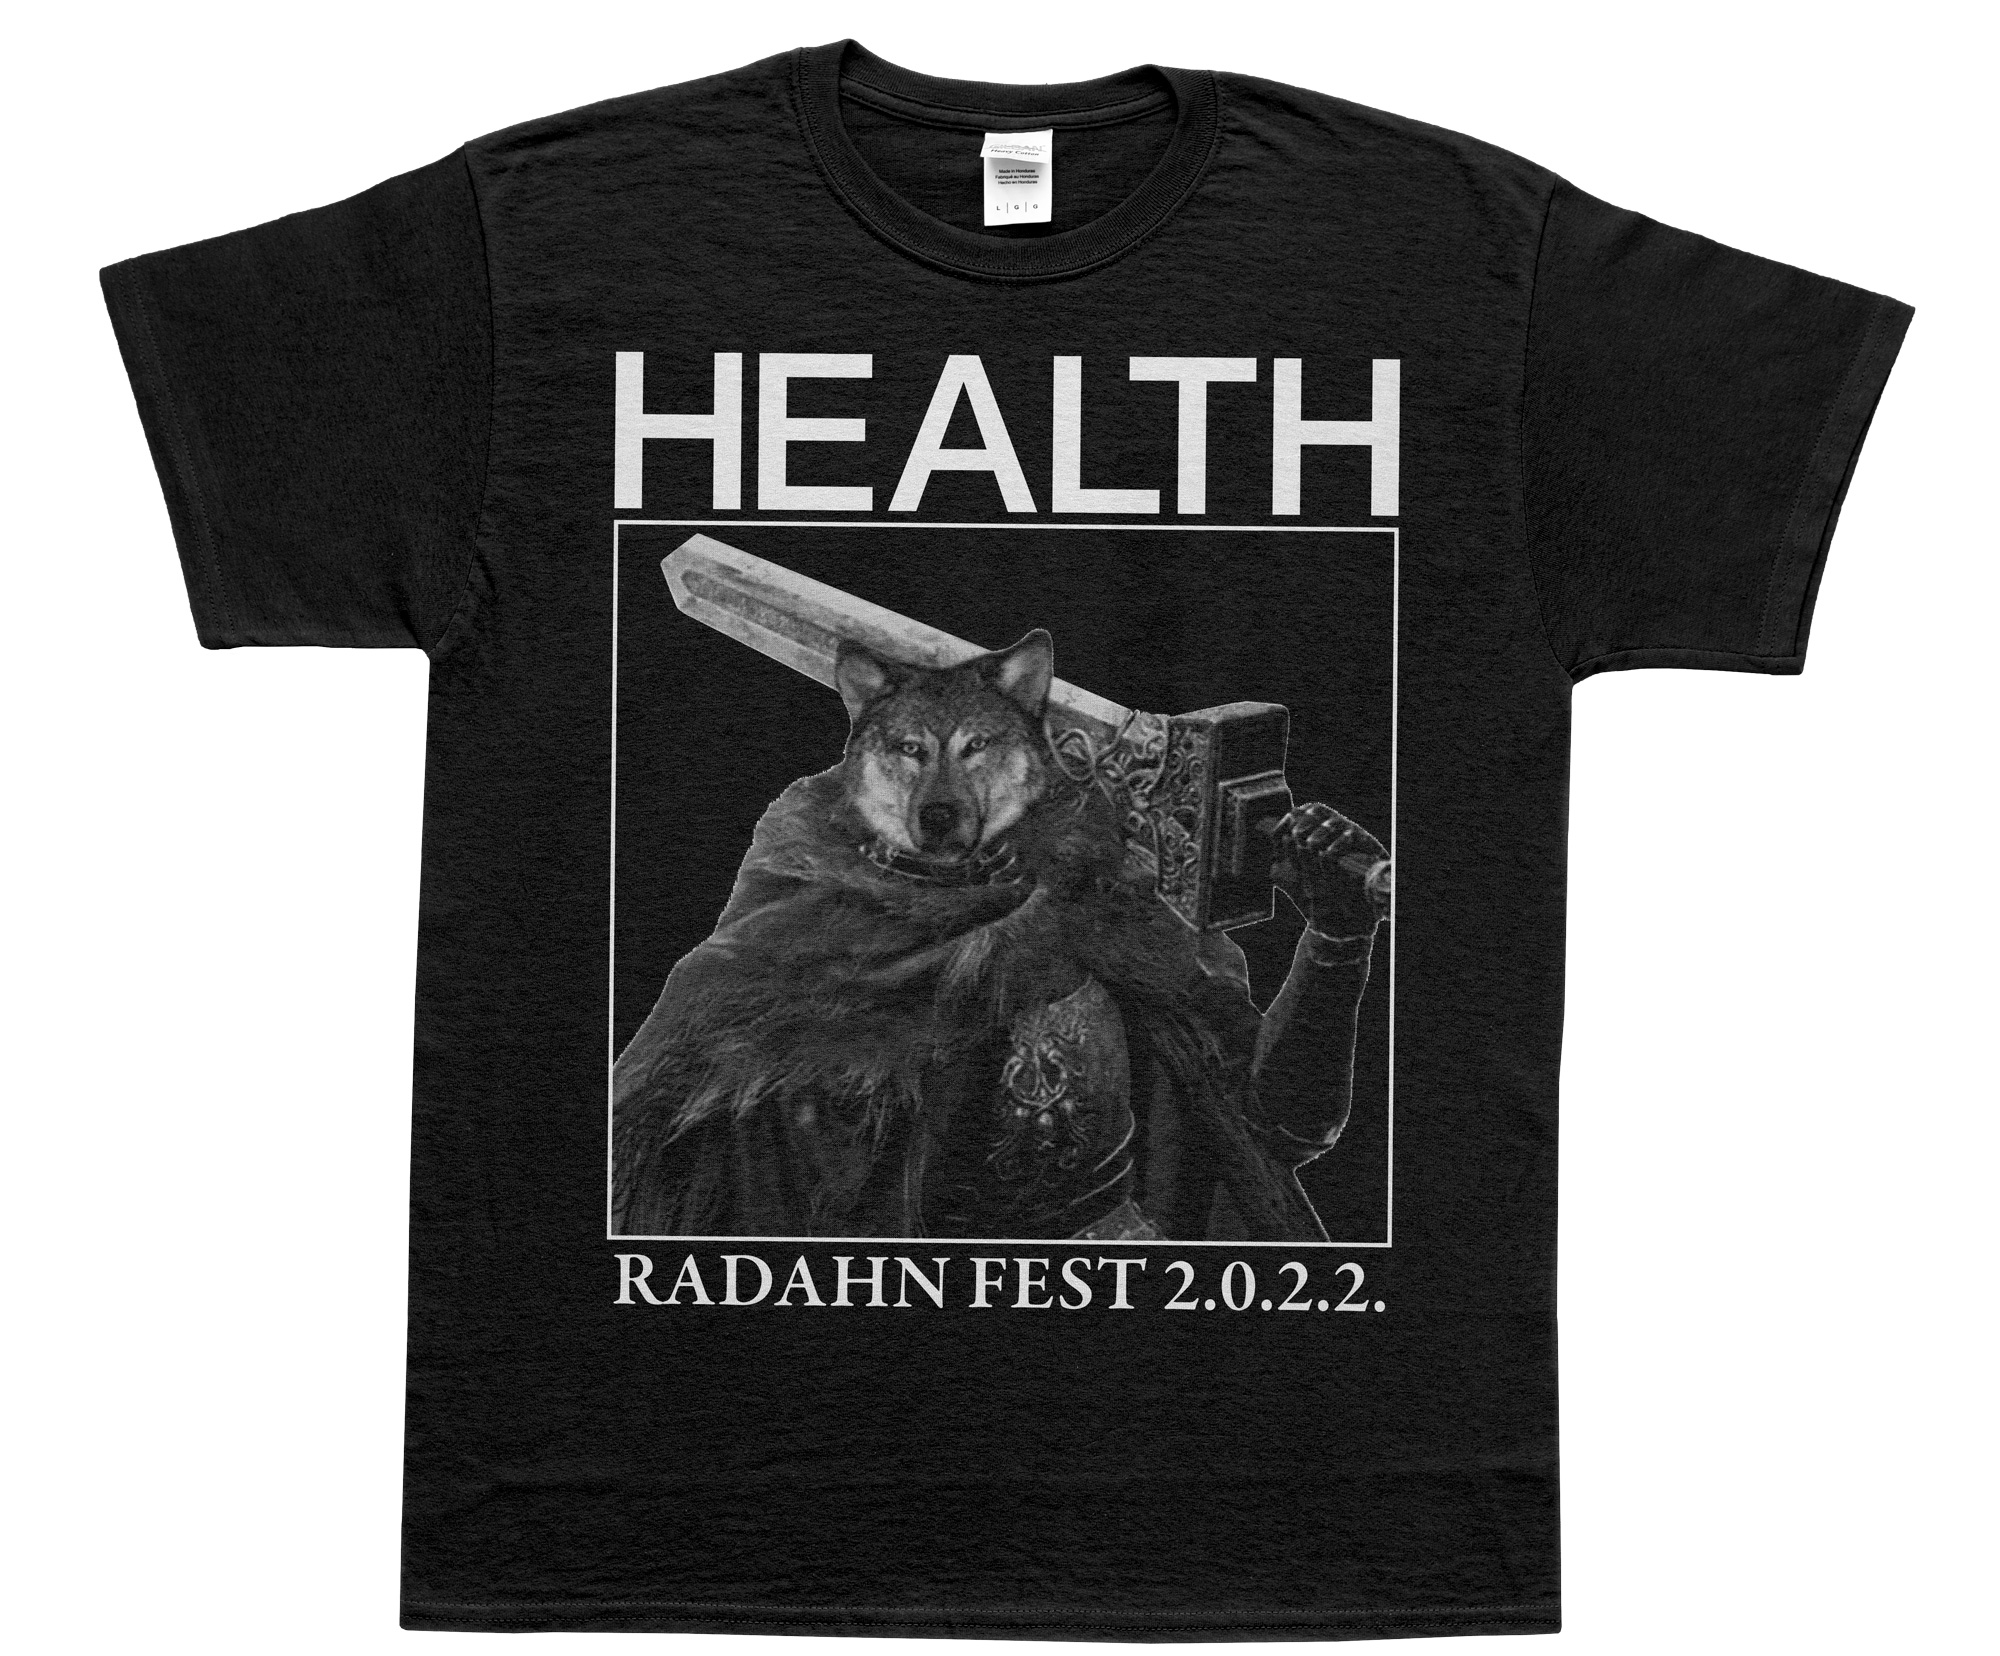 PRE-ORDER :: HEALTH x FABINO RADAHN FEST 2.0.2.2.